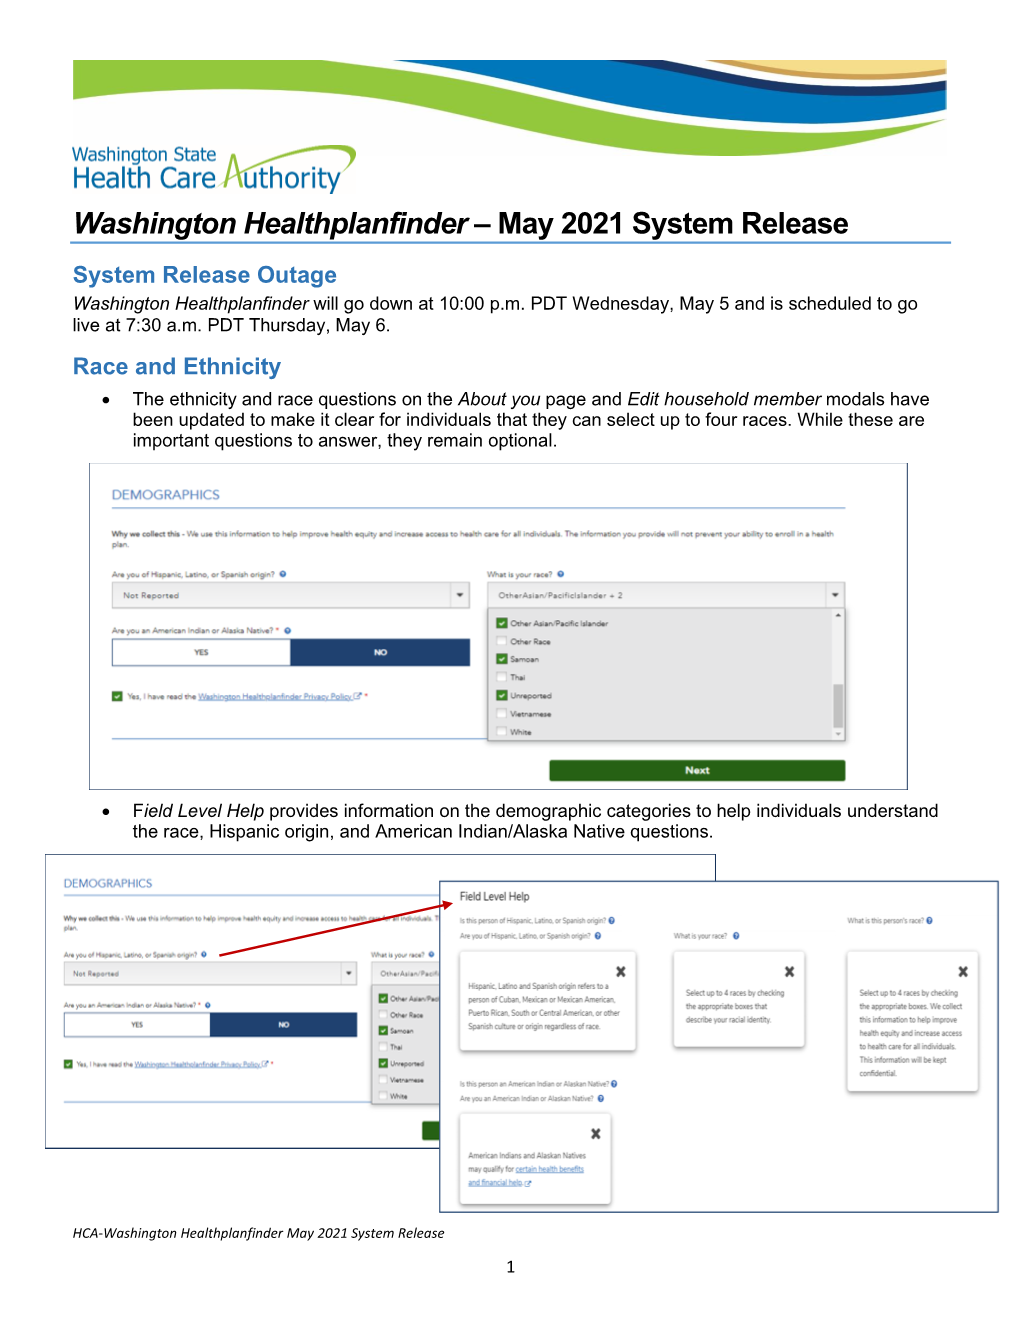 Washington Healthplanfinder – May 2021 System Release